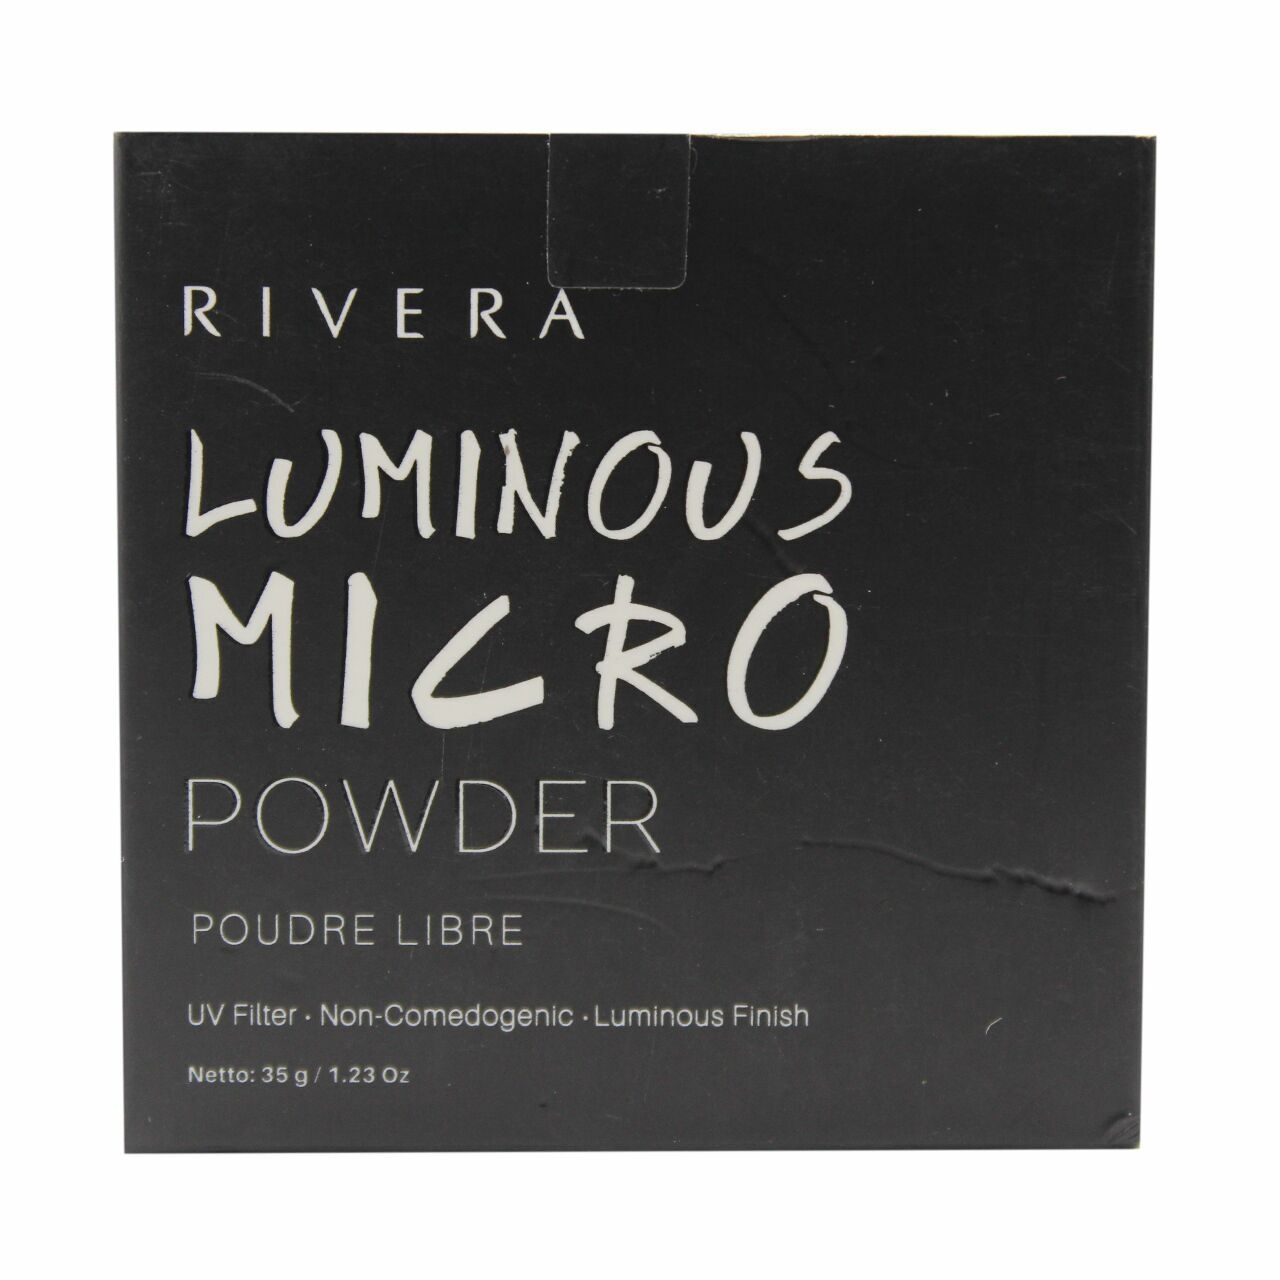 Rivera 03 Sand Beige Luminous Micro Powder